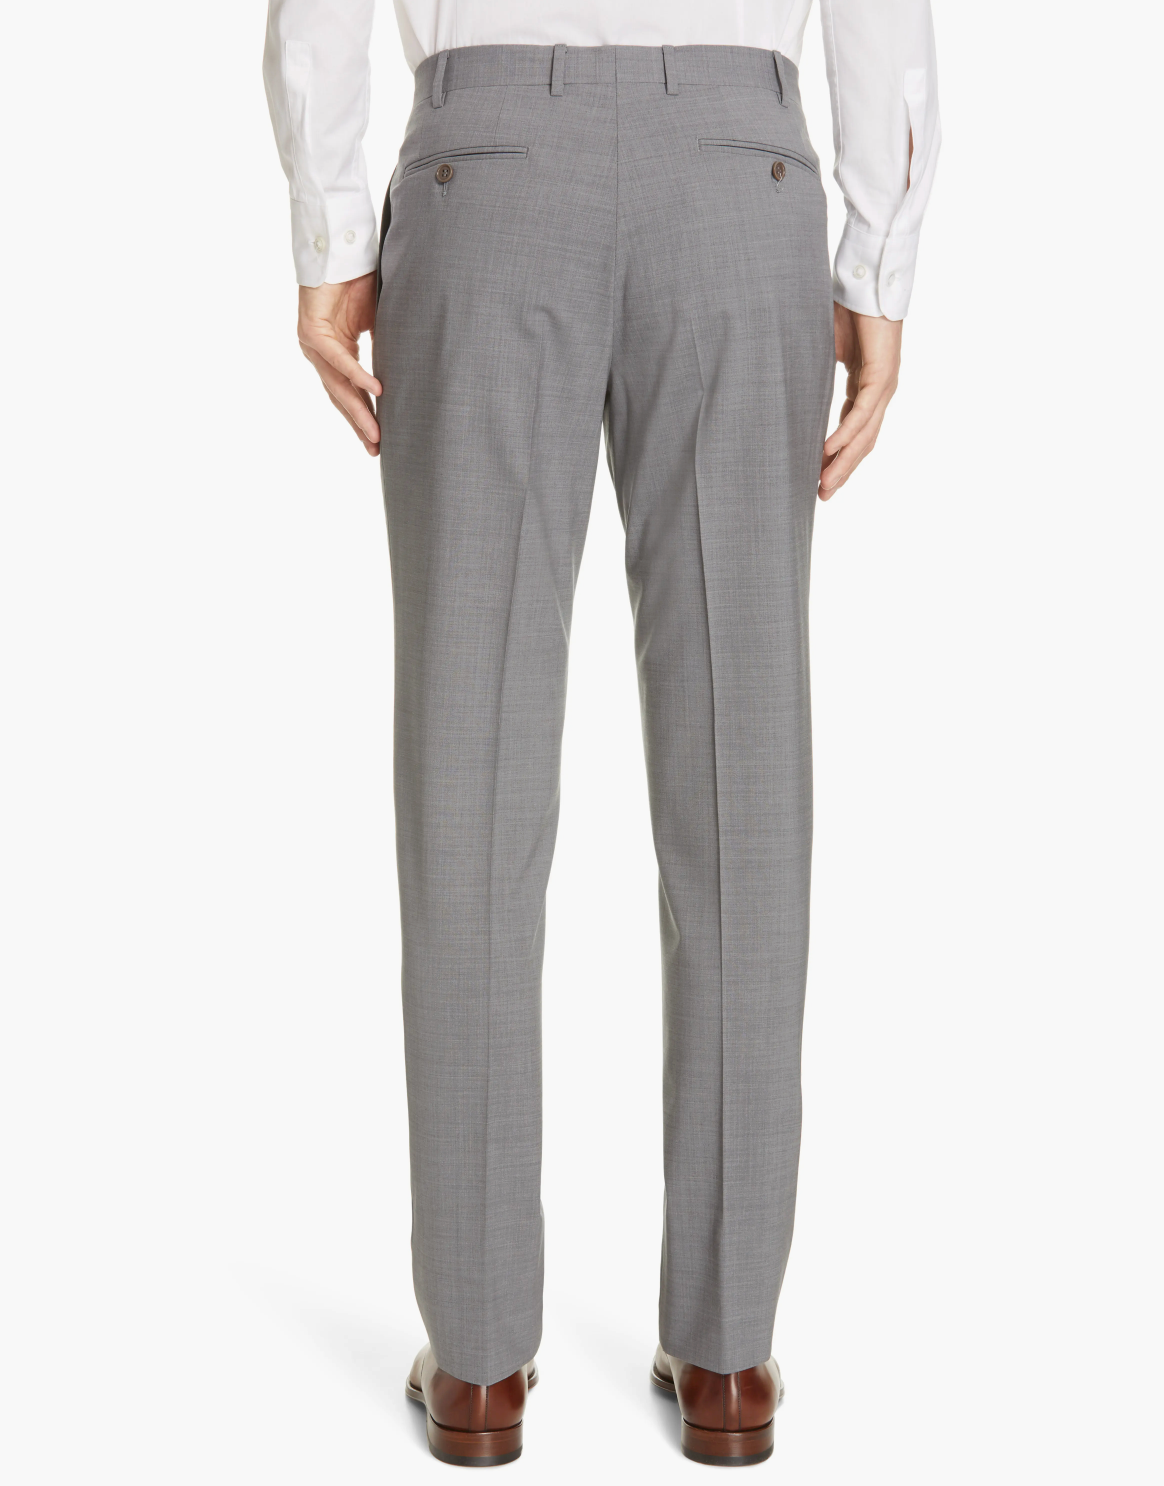 Canali Siena Classic Fit Super 130's Wool Dress Pants in Light Grey